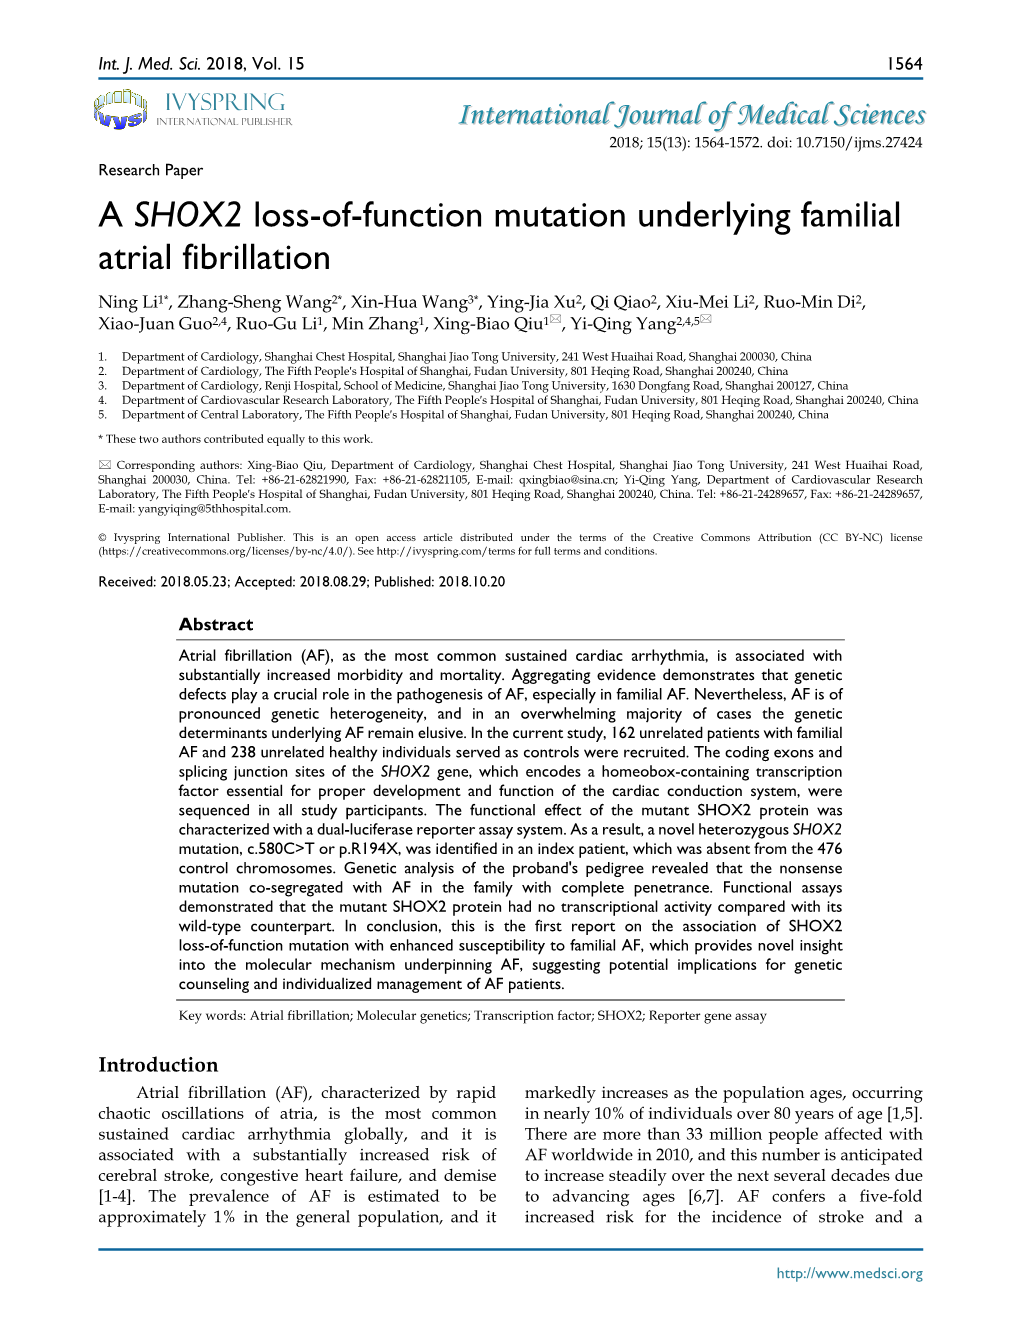 A SHOX2 Loss-Of-Function Mutation Underlying Familial Atrial Fibrillation